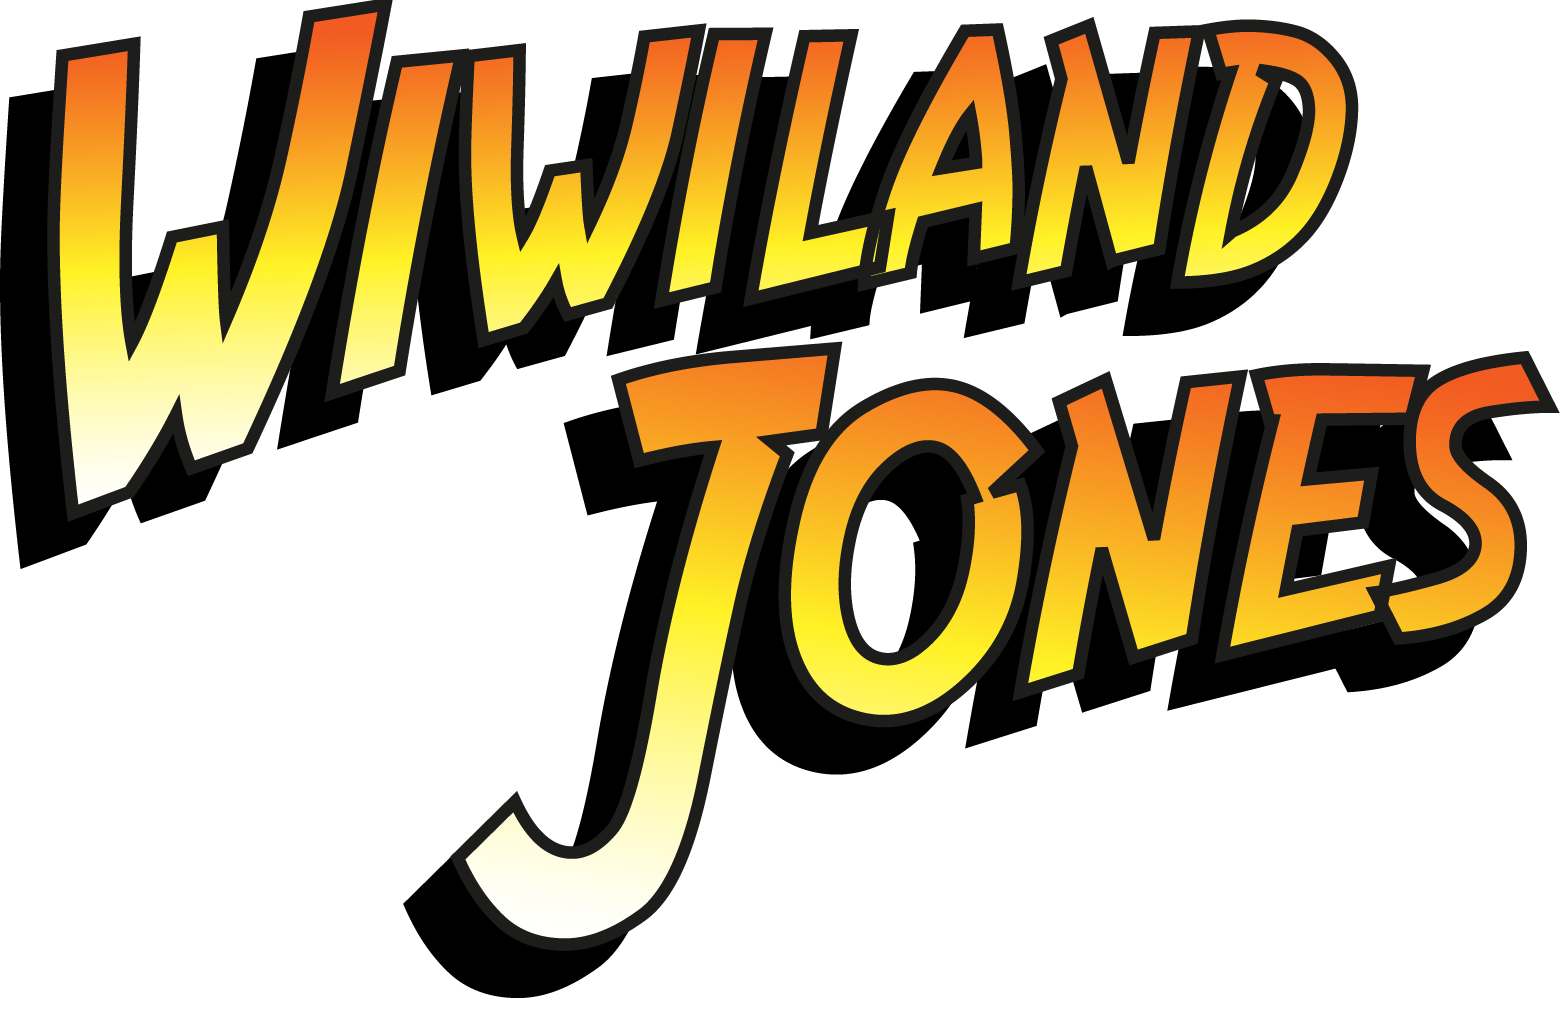 wiwland jones logo